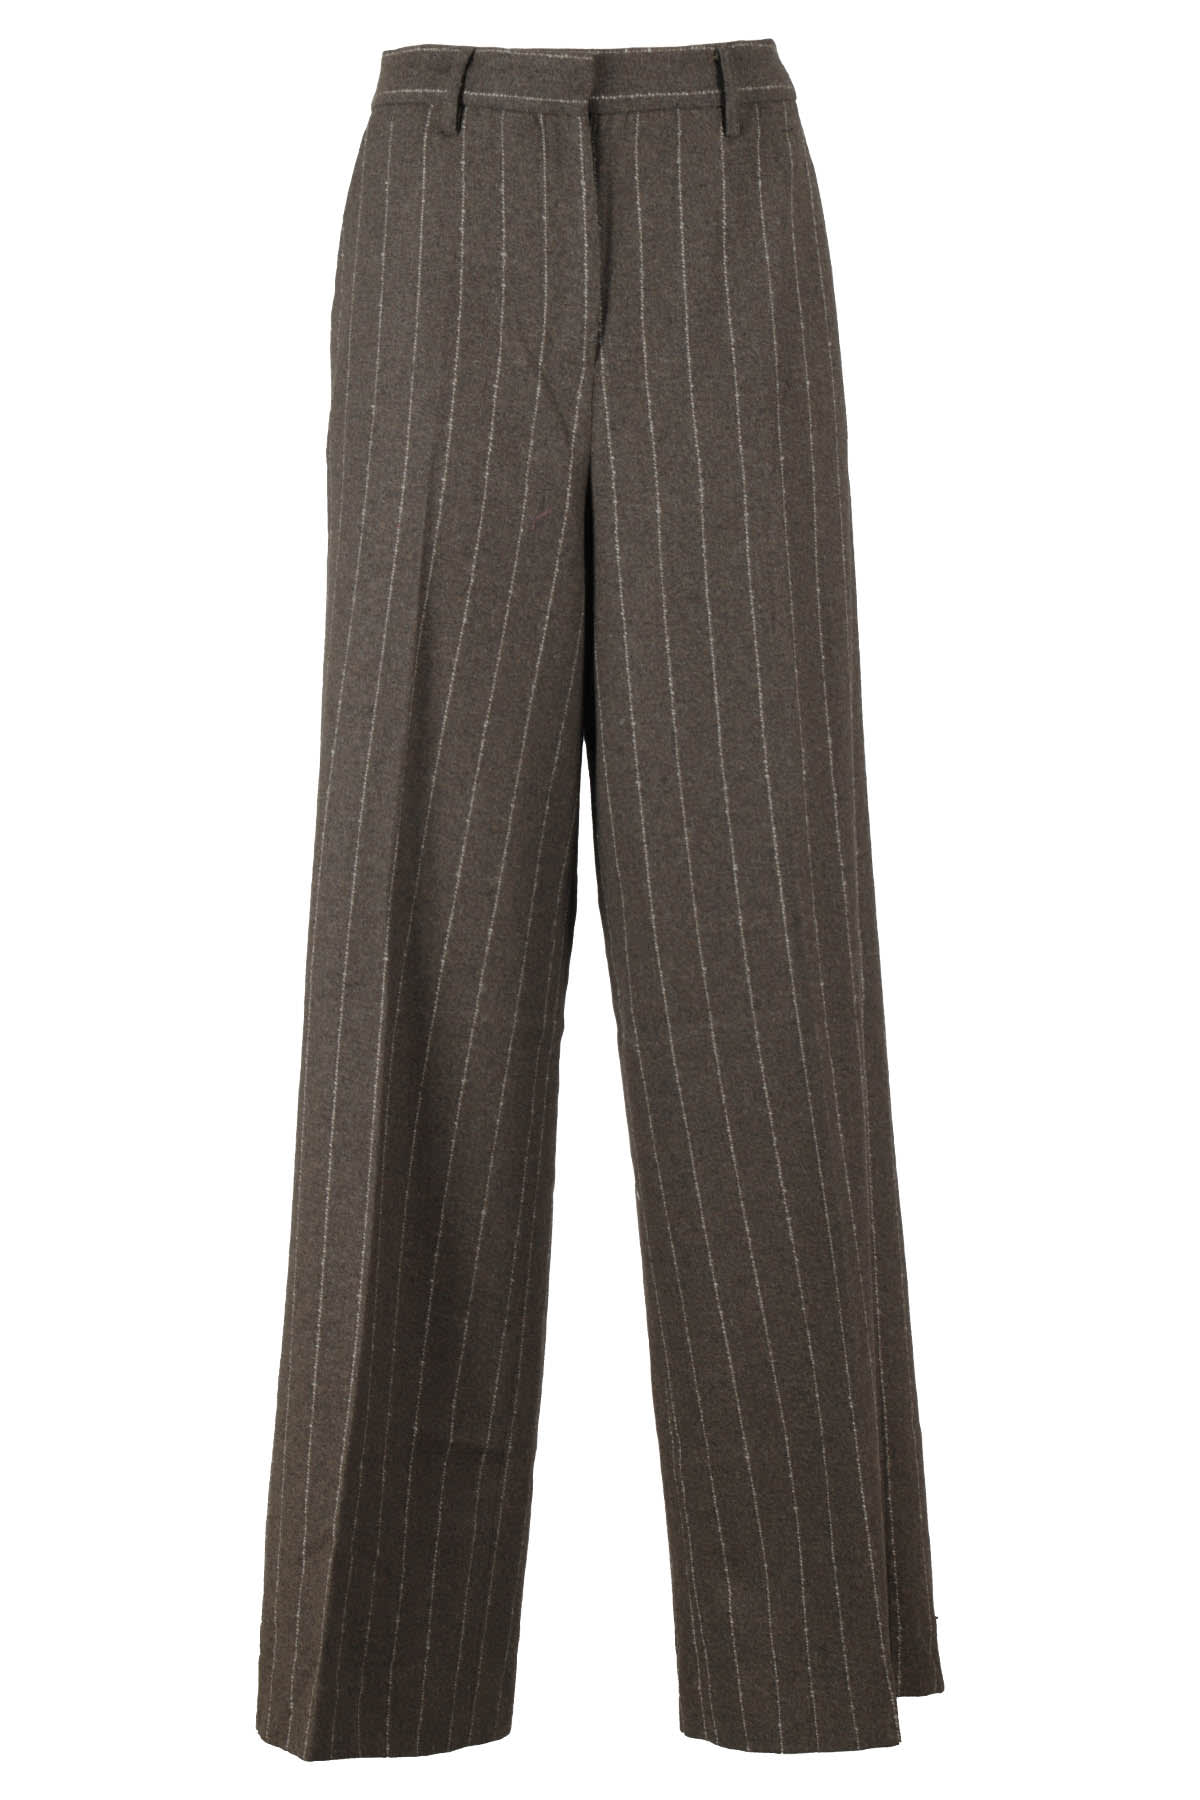 Shop Remain Birger Christensen Pinstripe Wide Pants